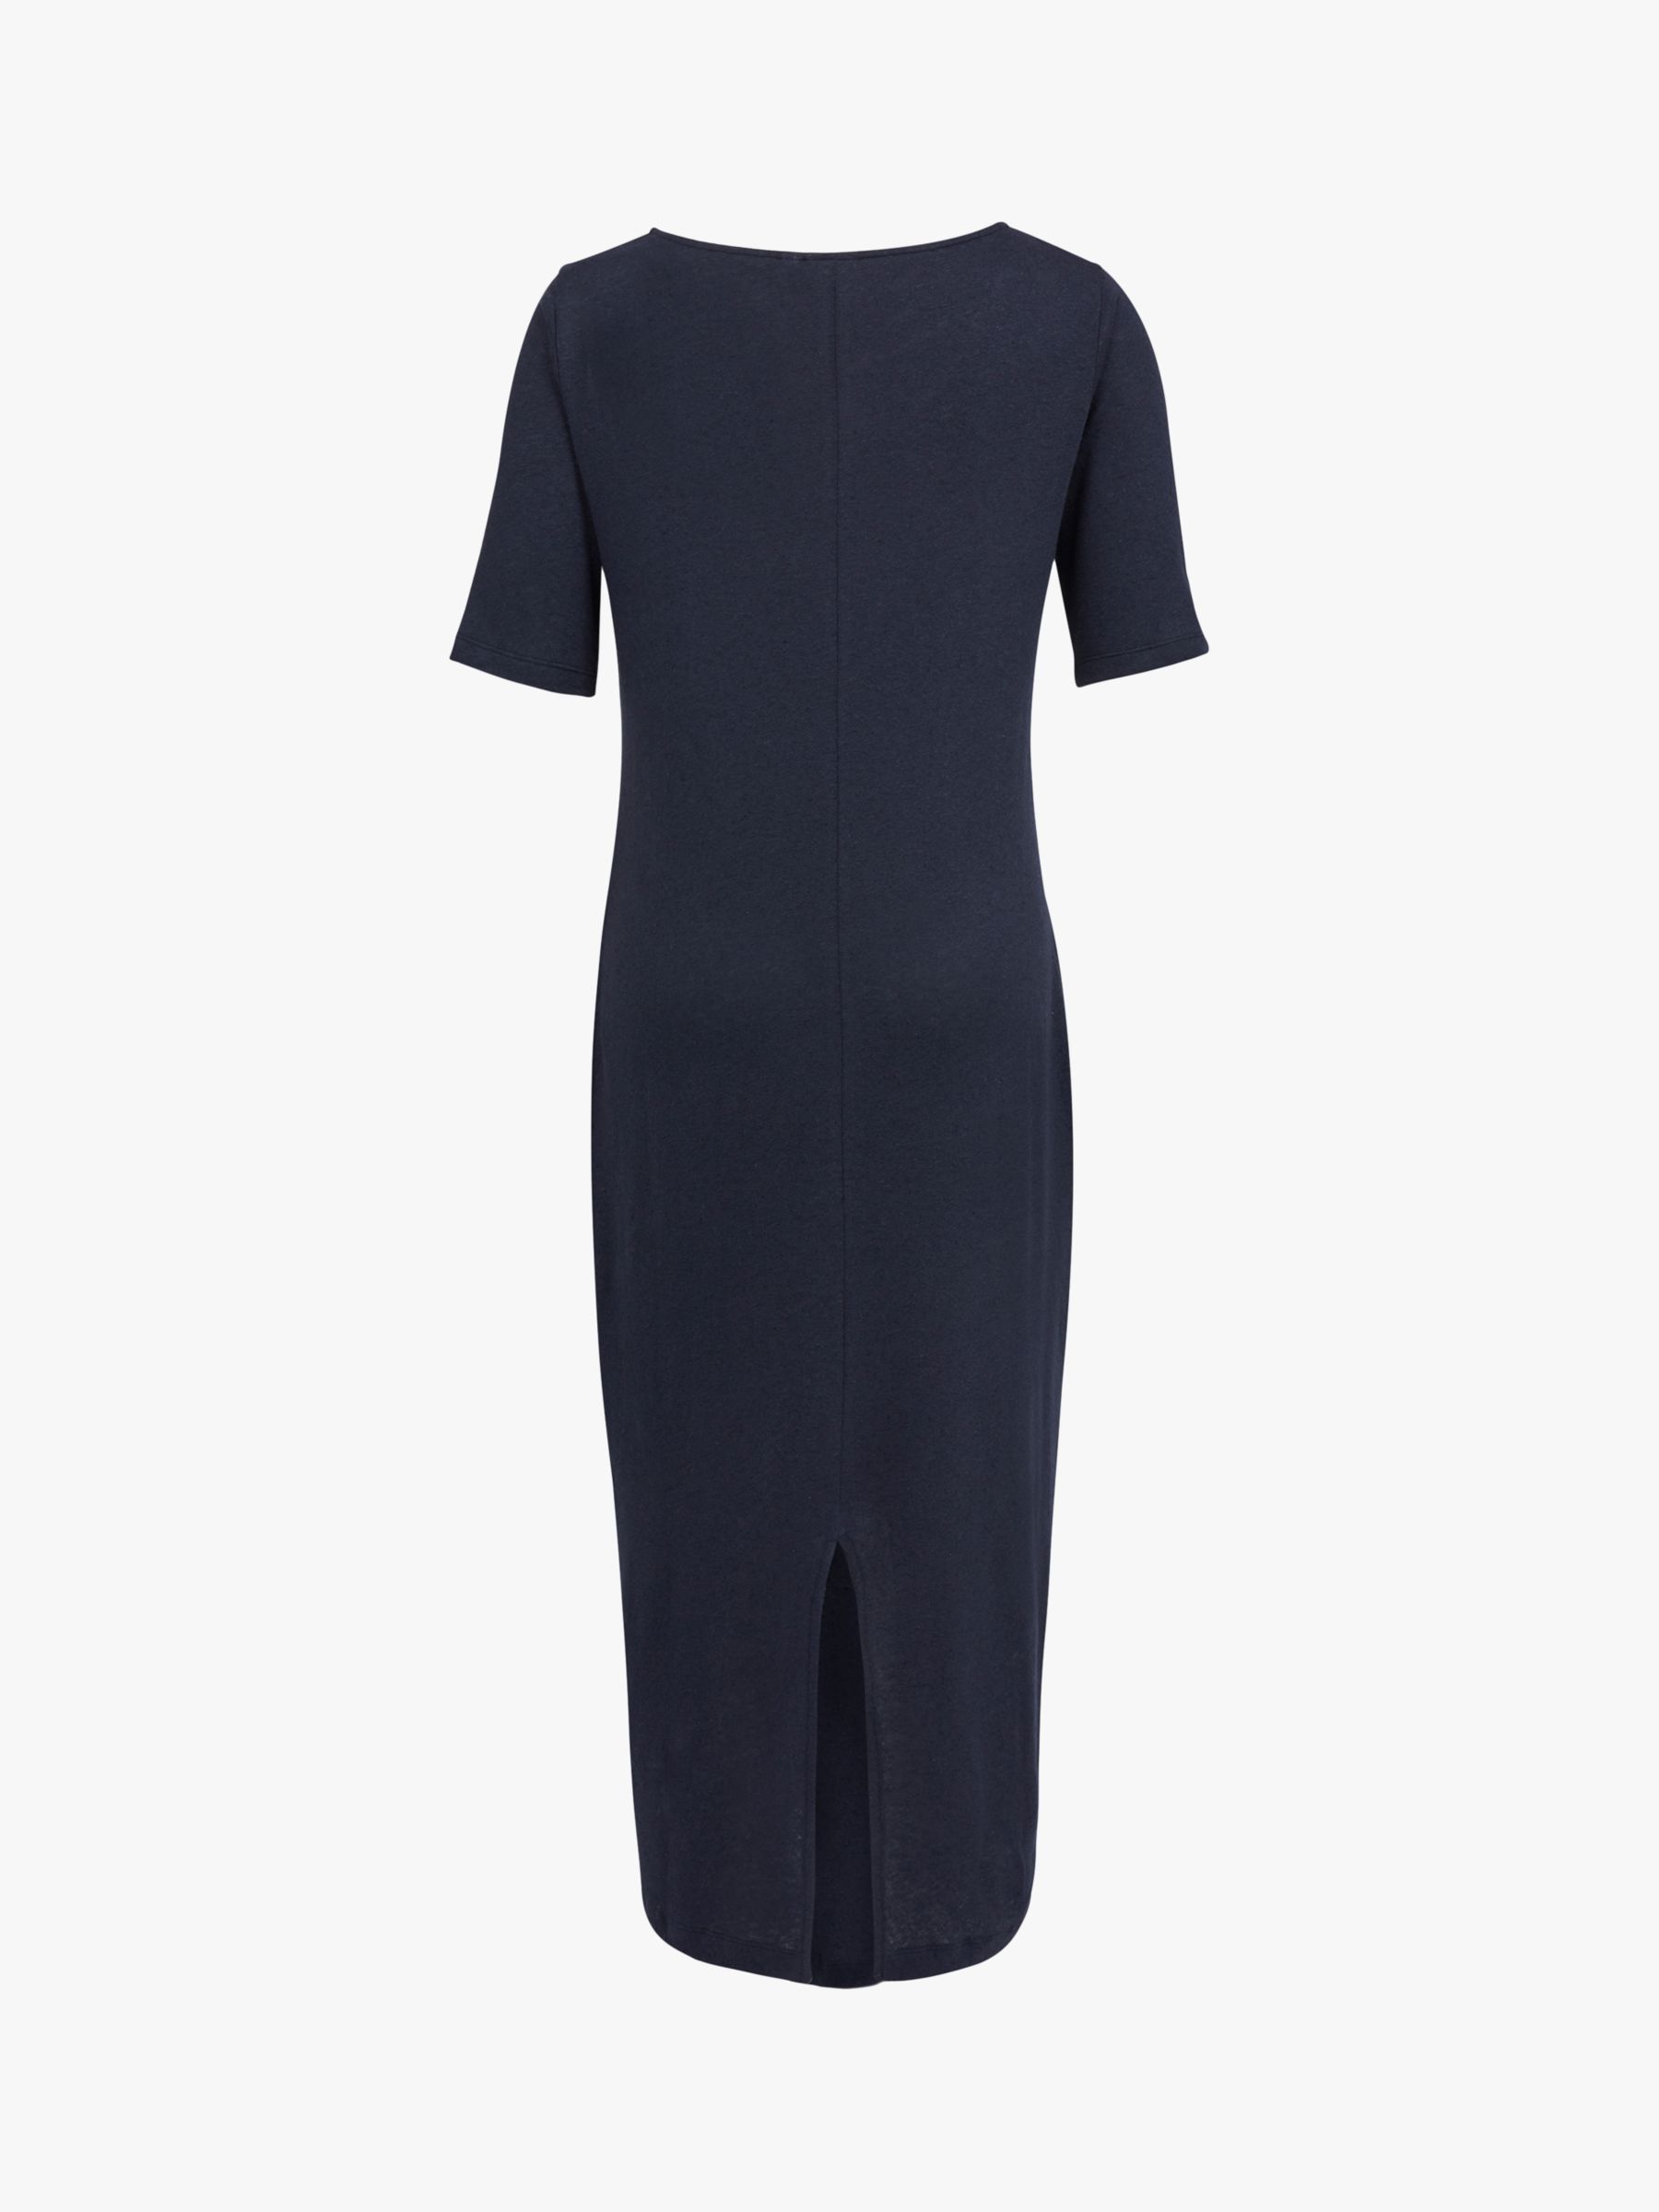 Celtic & Co. Linen Cotton Blend V-Neck Midi Dress, Navy, 16